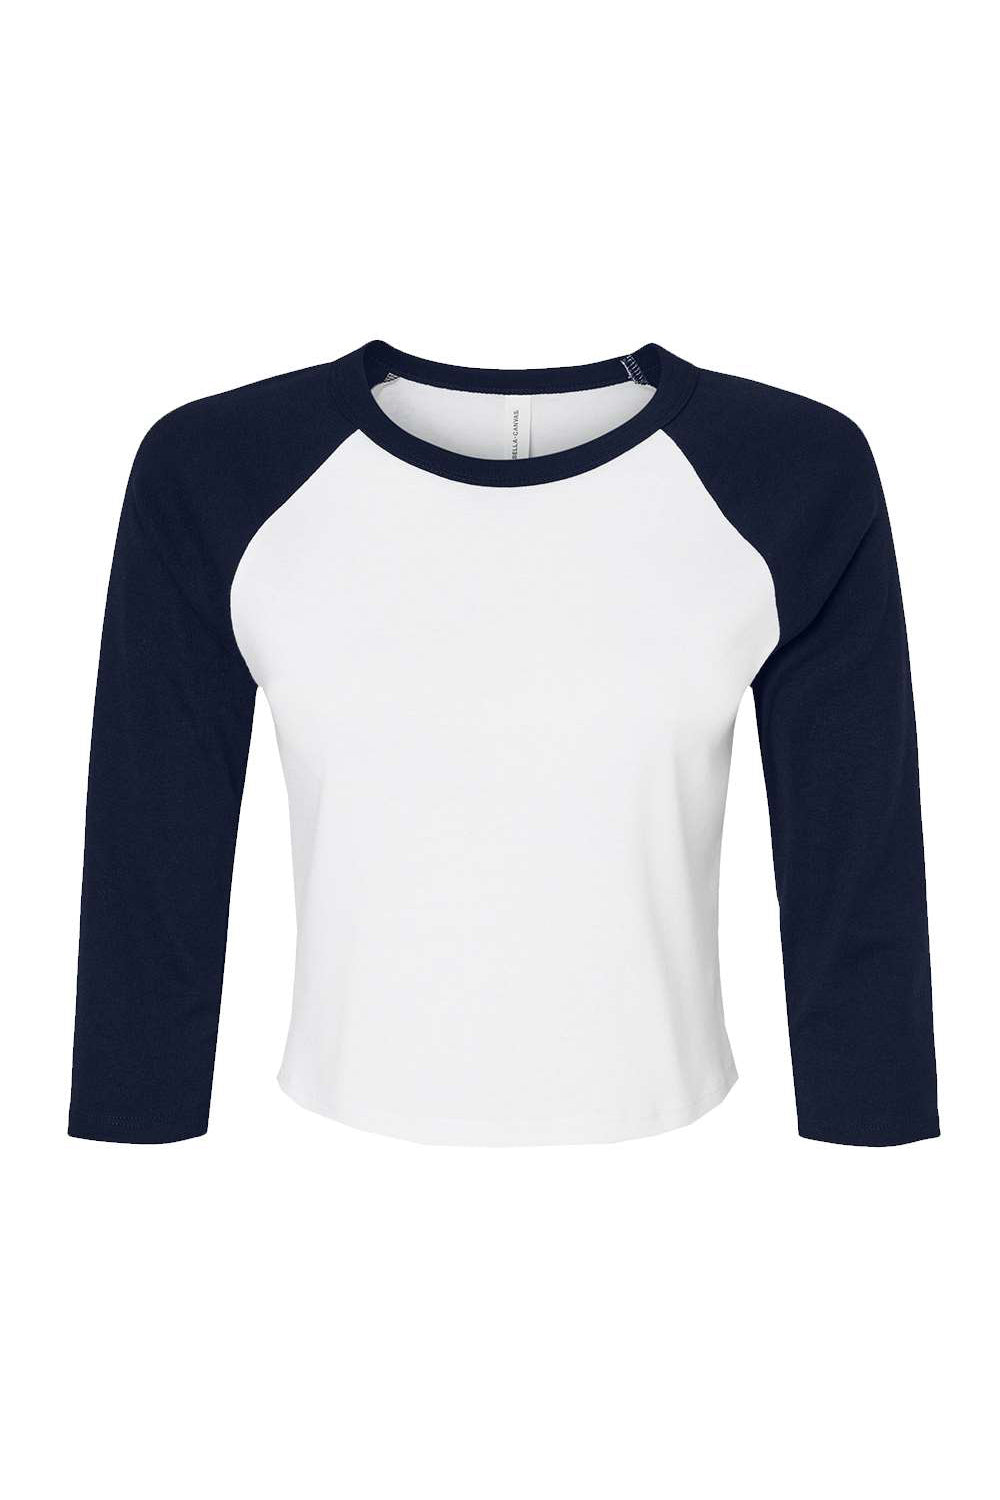 Bella + Canvas 1200 Womens Micro Ribbed Raglan 3/4 Sleeve Crewneck Baby T-Shirt White/Navy Blue Flat Front